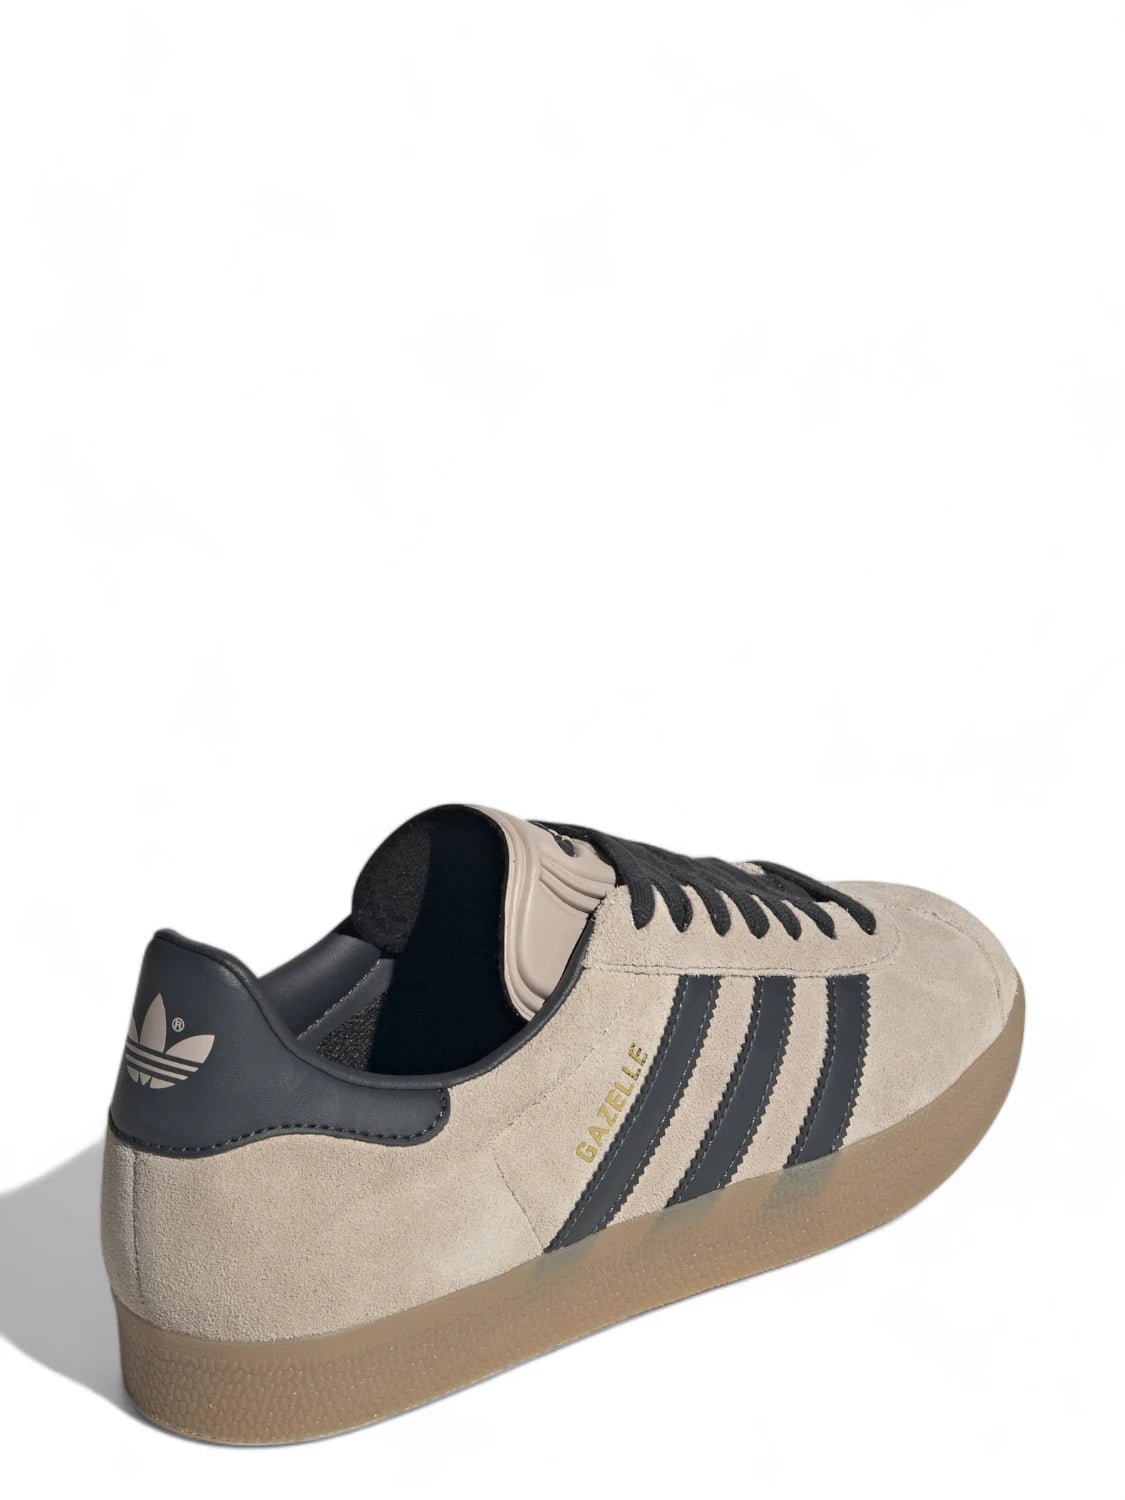 Adidas Gazelle-Adidas Originals-Sneakers-Vittorio Citro Boutique